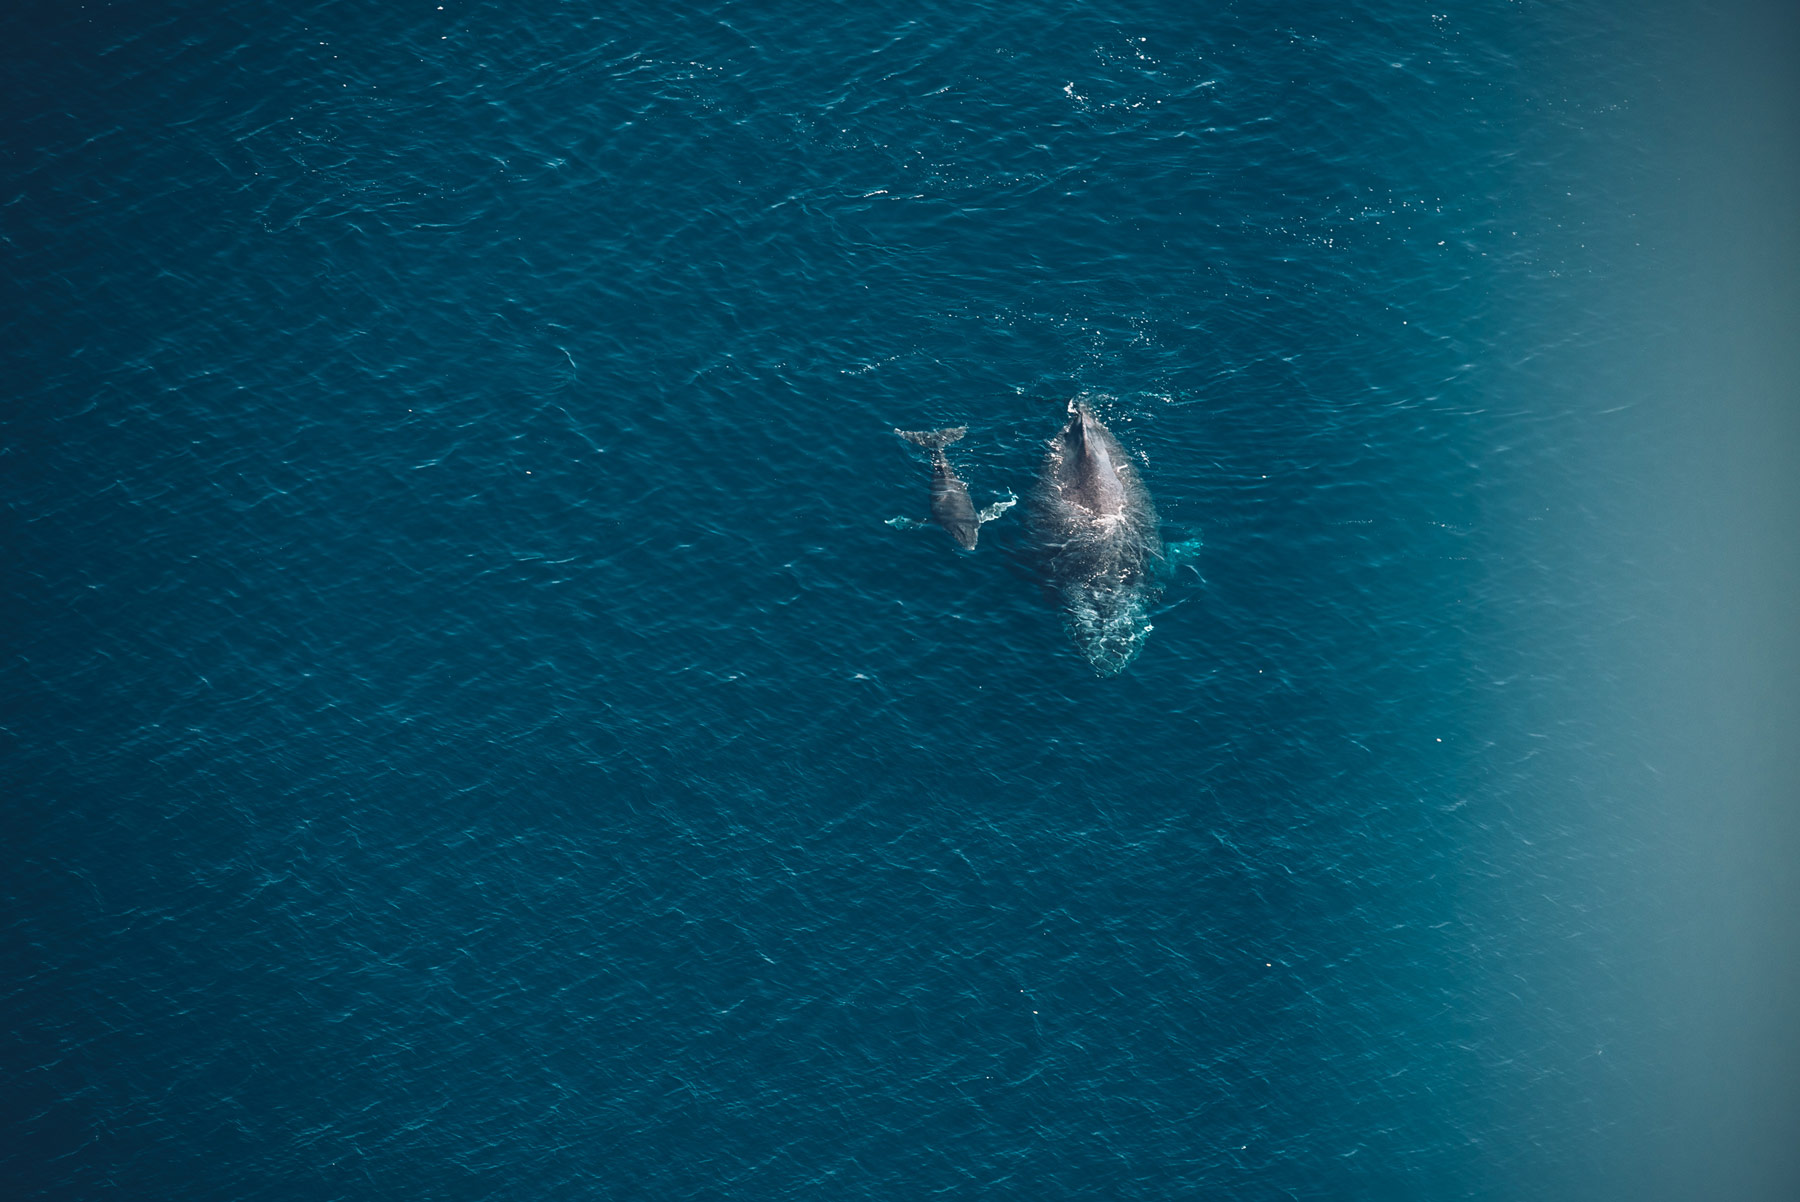 Baleines depuis les airs, Vol ULM avec TipTop, Mayotte